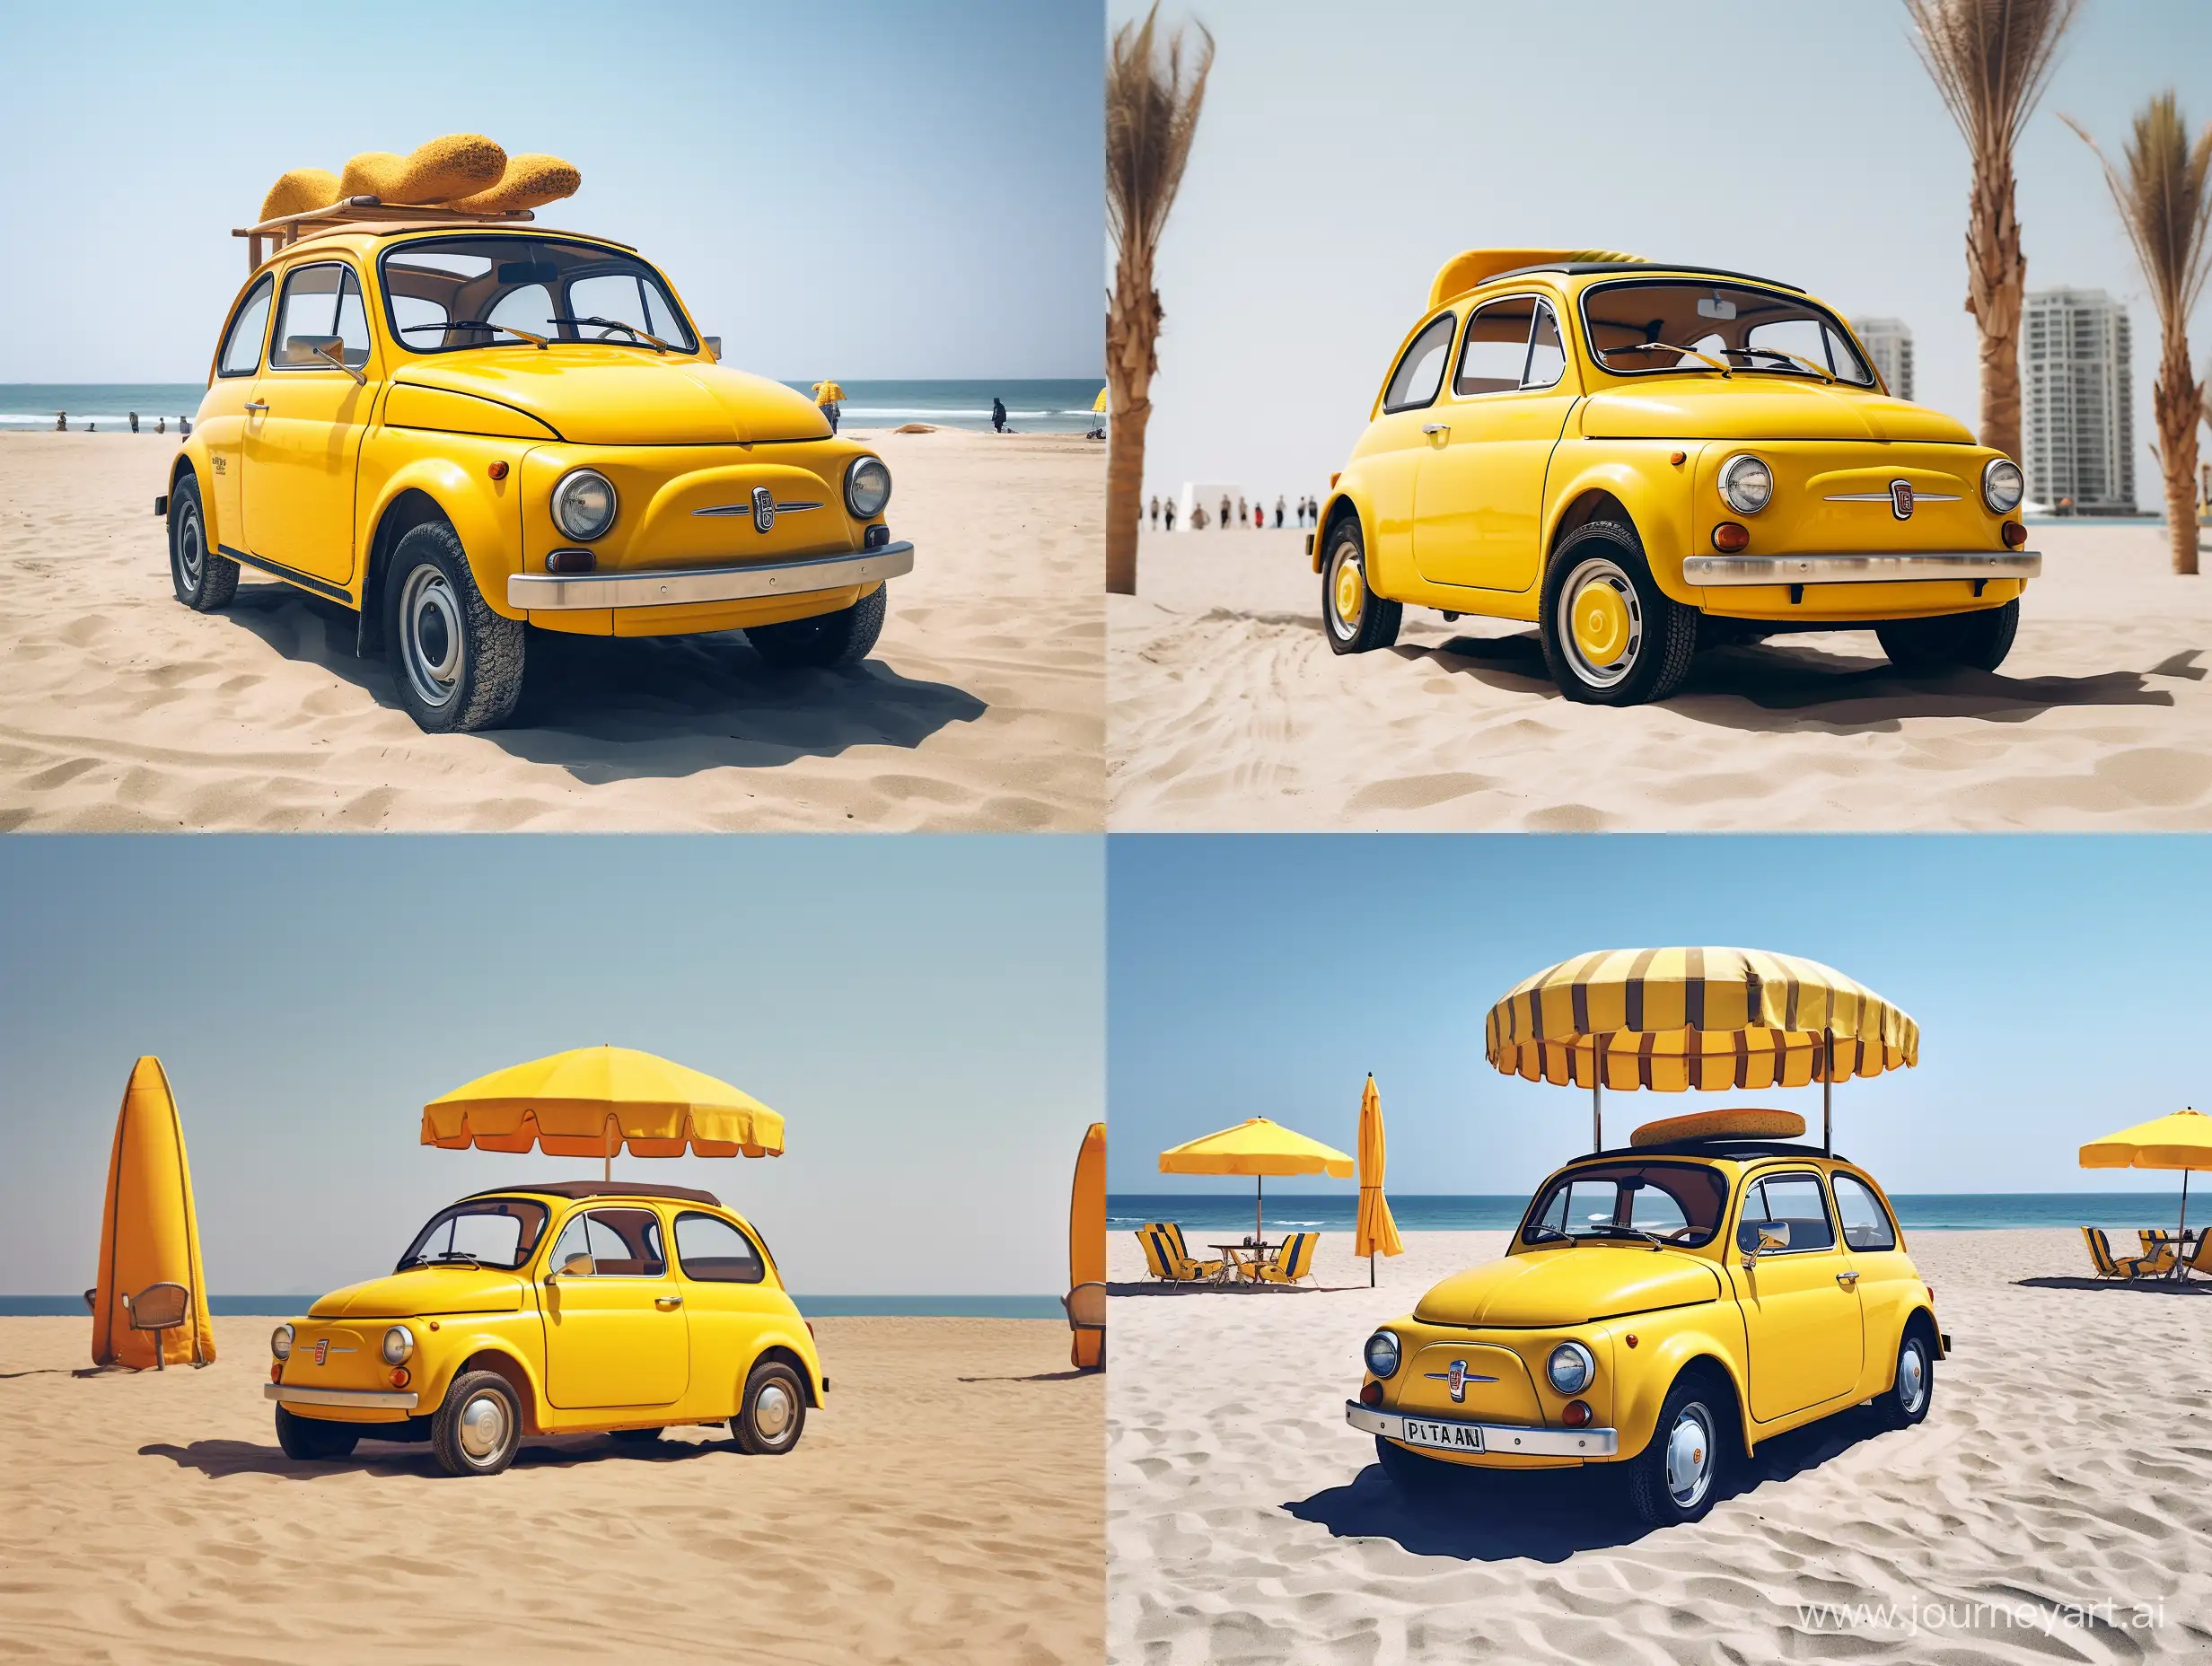 Sunny-Dubai-Beach-Day-with-a-Vibrant-Yellow-Fiat